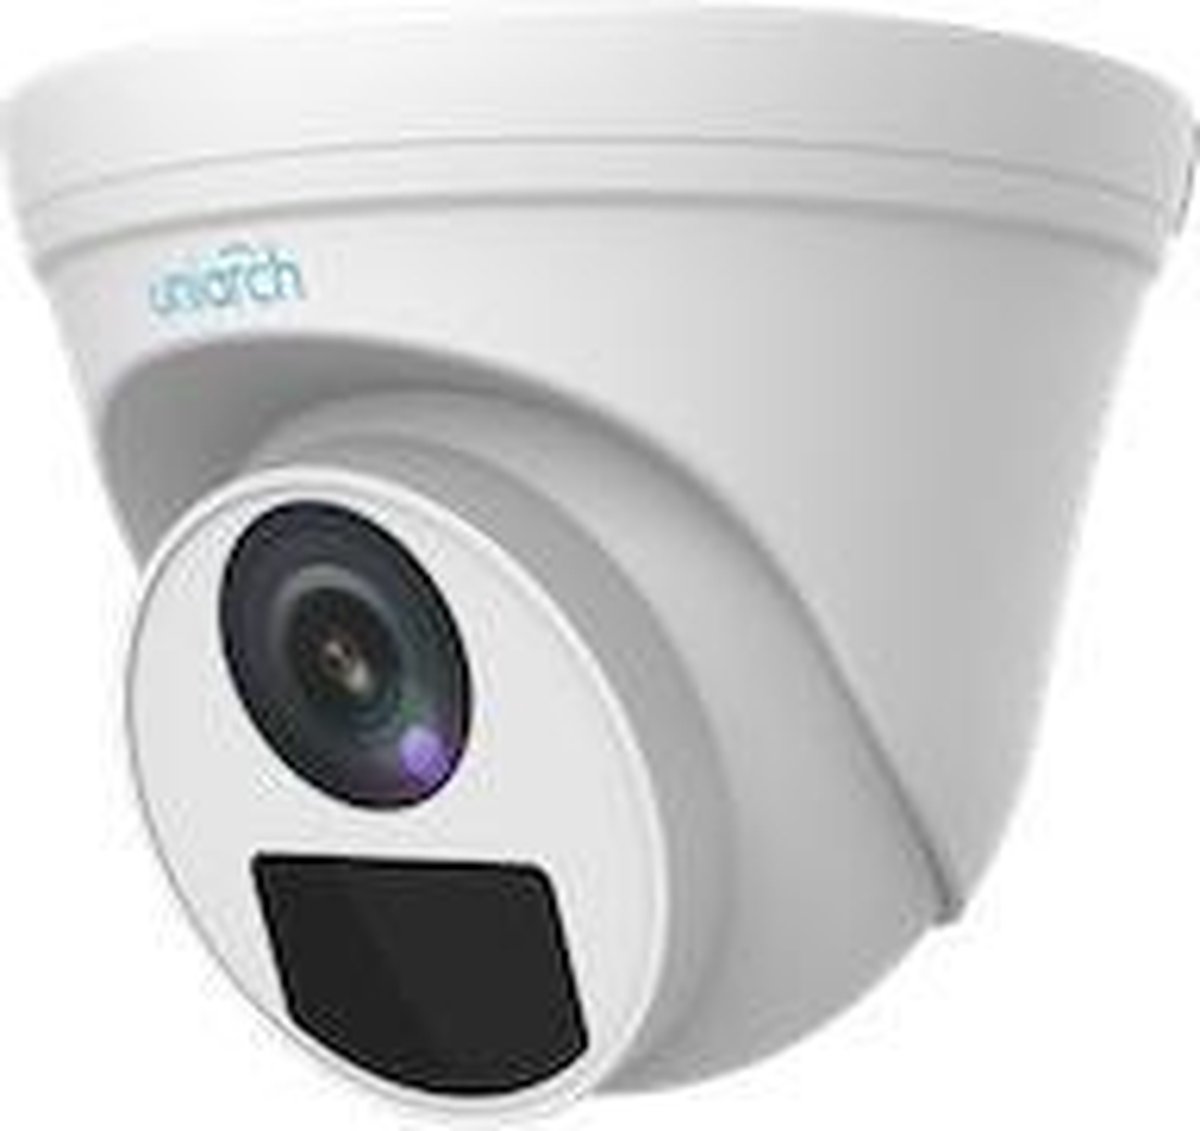 Uniarch IPC-T113-PF28 Full HD 3MP buiten turret camera met 30m Smart IR, WDR, PoE - Beveiligingscamera IP camera bewakingscamera camerabewaking veiligheidscamera beveiliging netwerk camera webcam